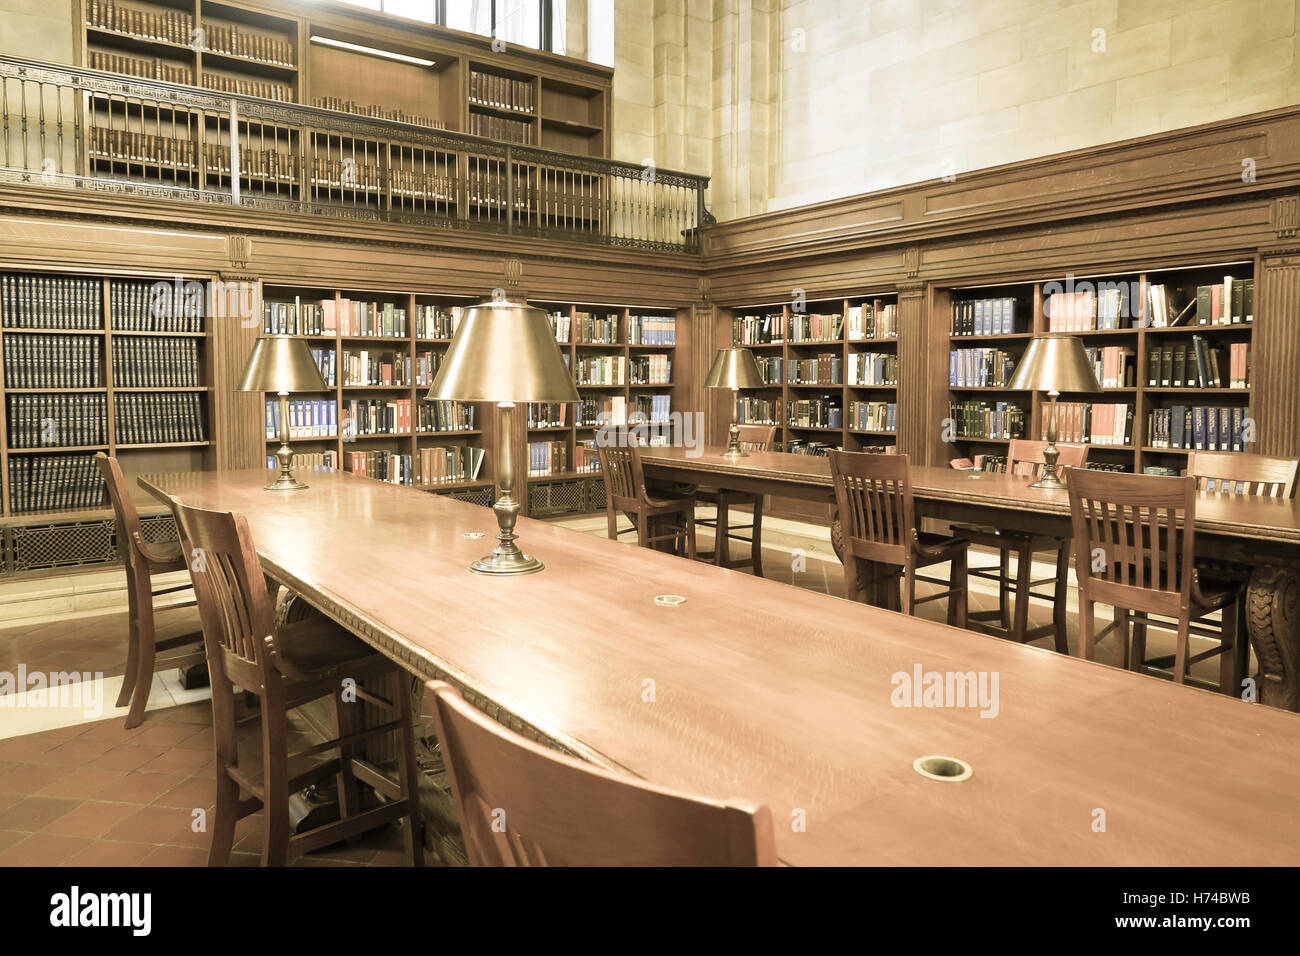 Bill Blass Public Catalog Room, New York Public Library, NYC Stock ...